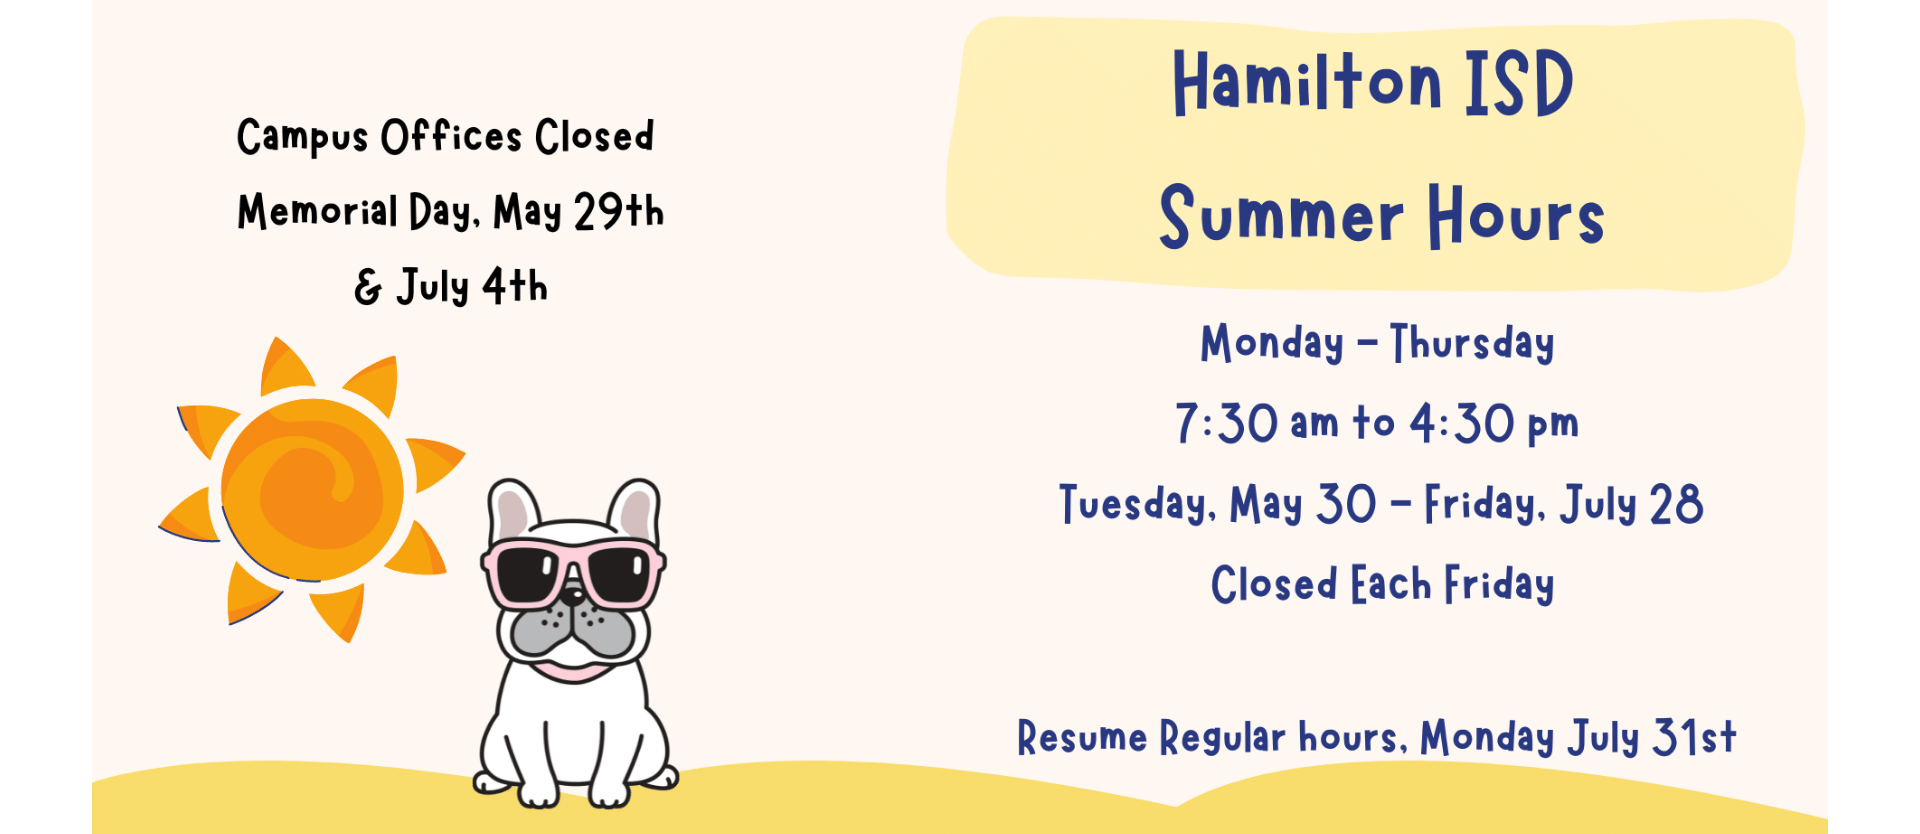 Summer Hours 7:30 to 4:30, Monday thru Thursday